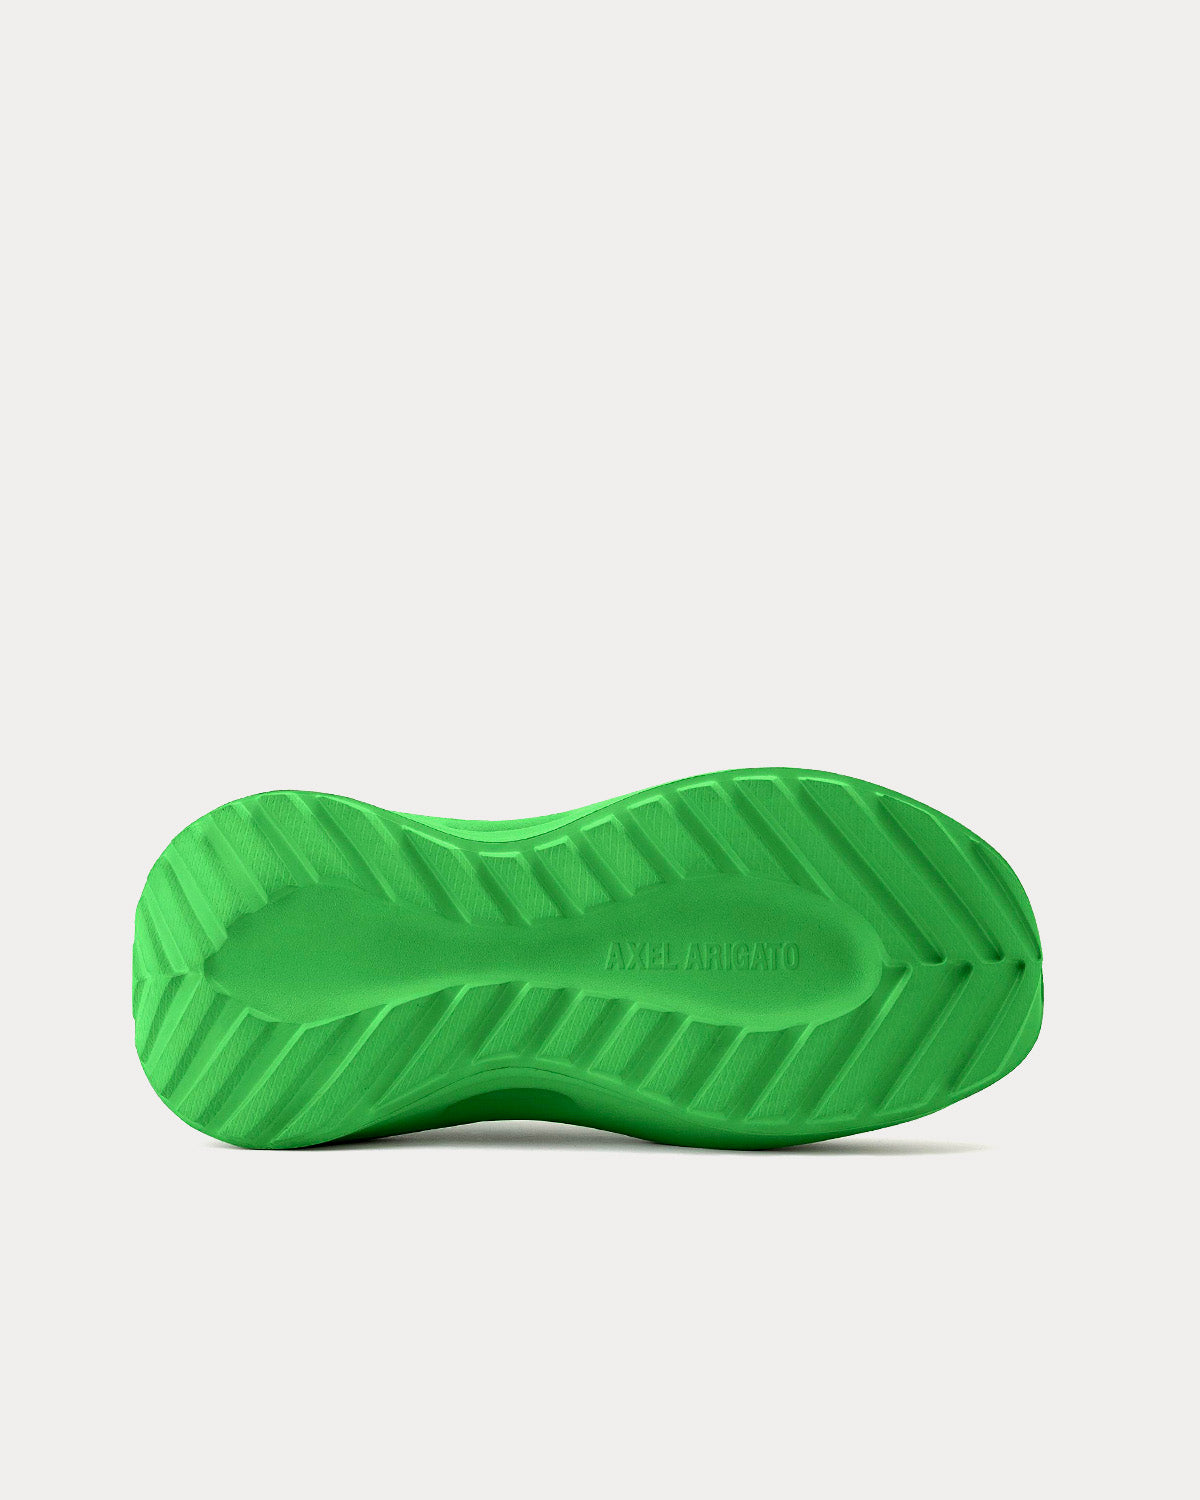 Axel Arigato - Pyro Bright Green Slip On Sneakers